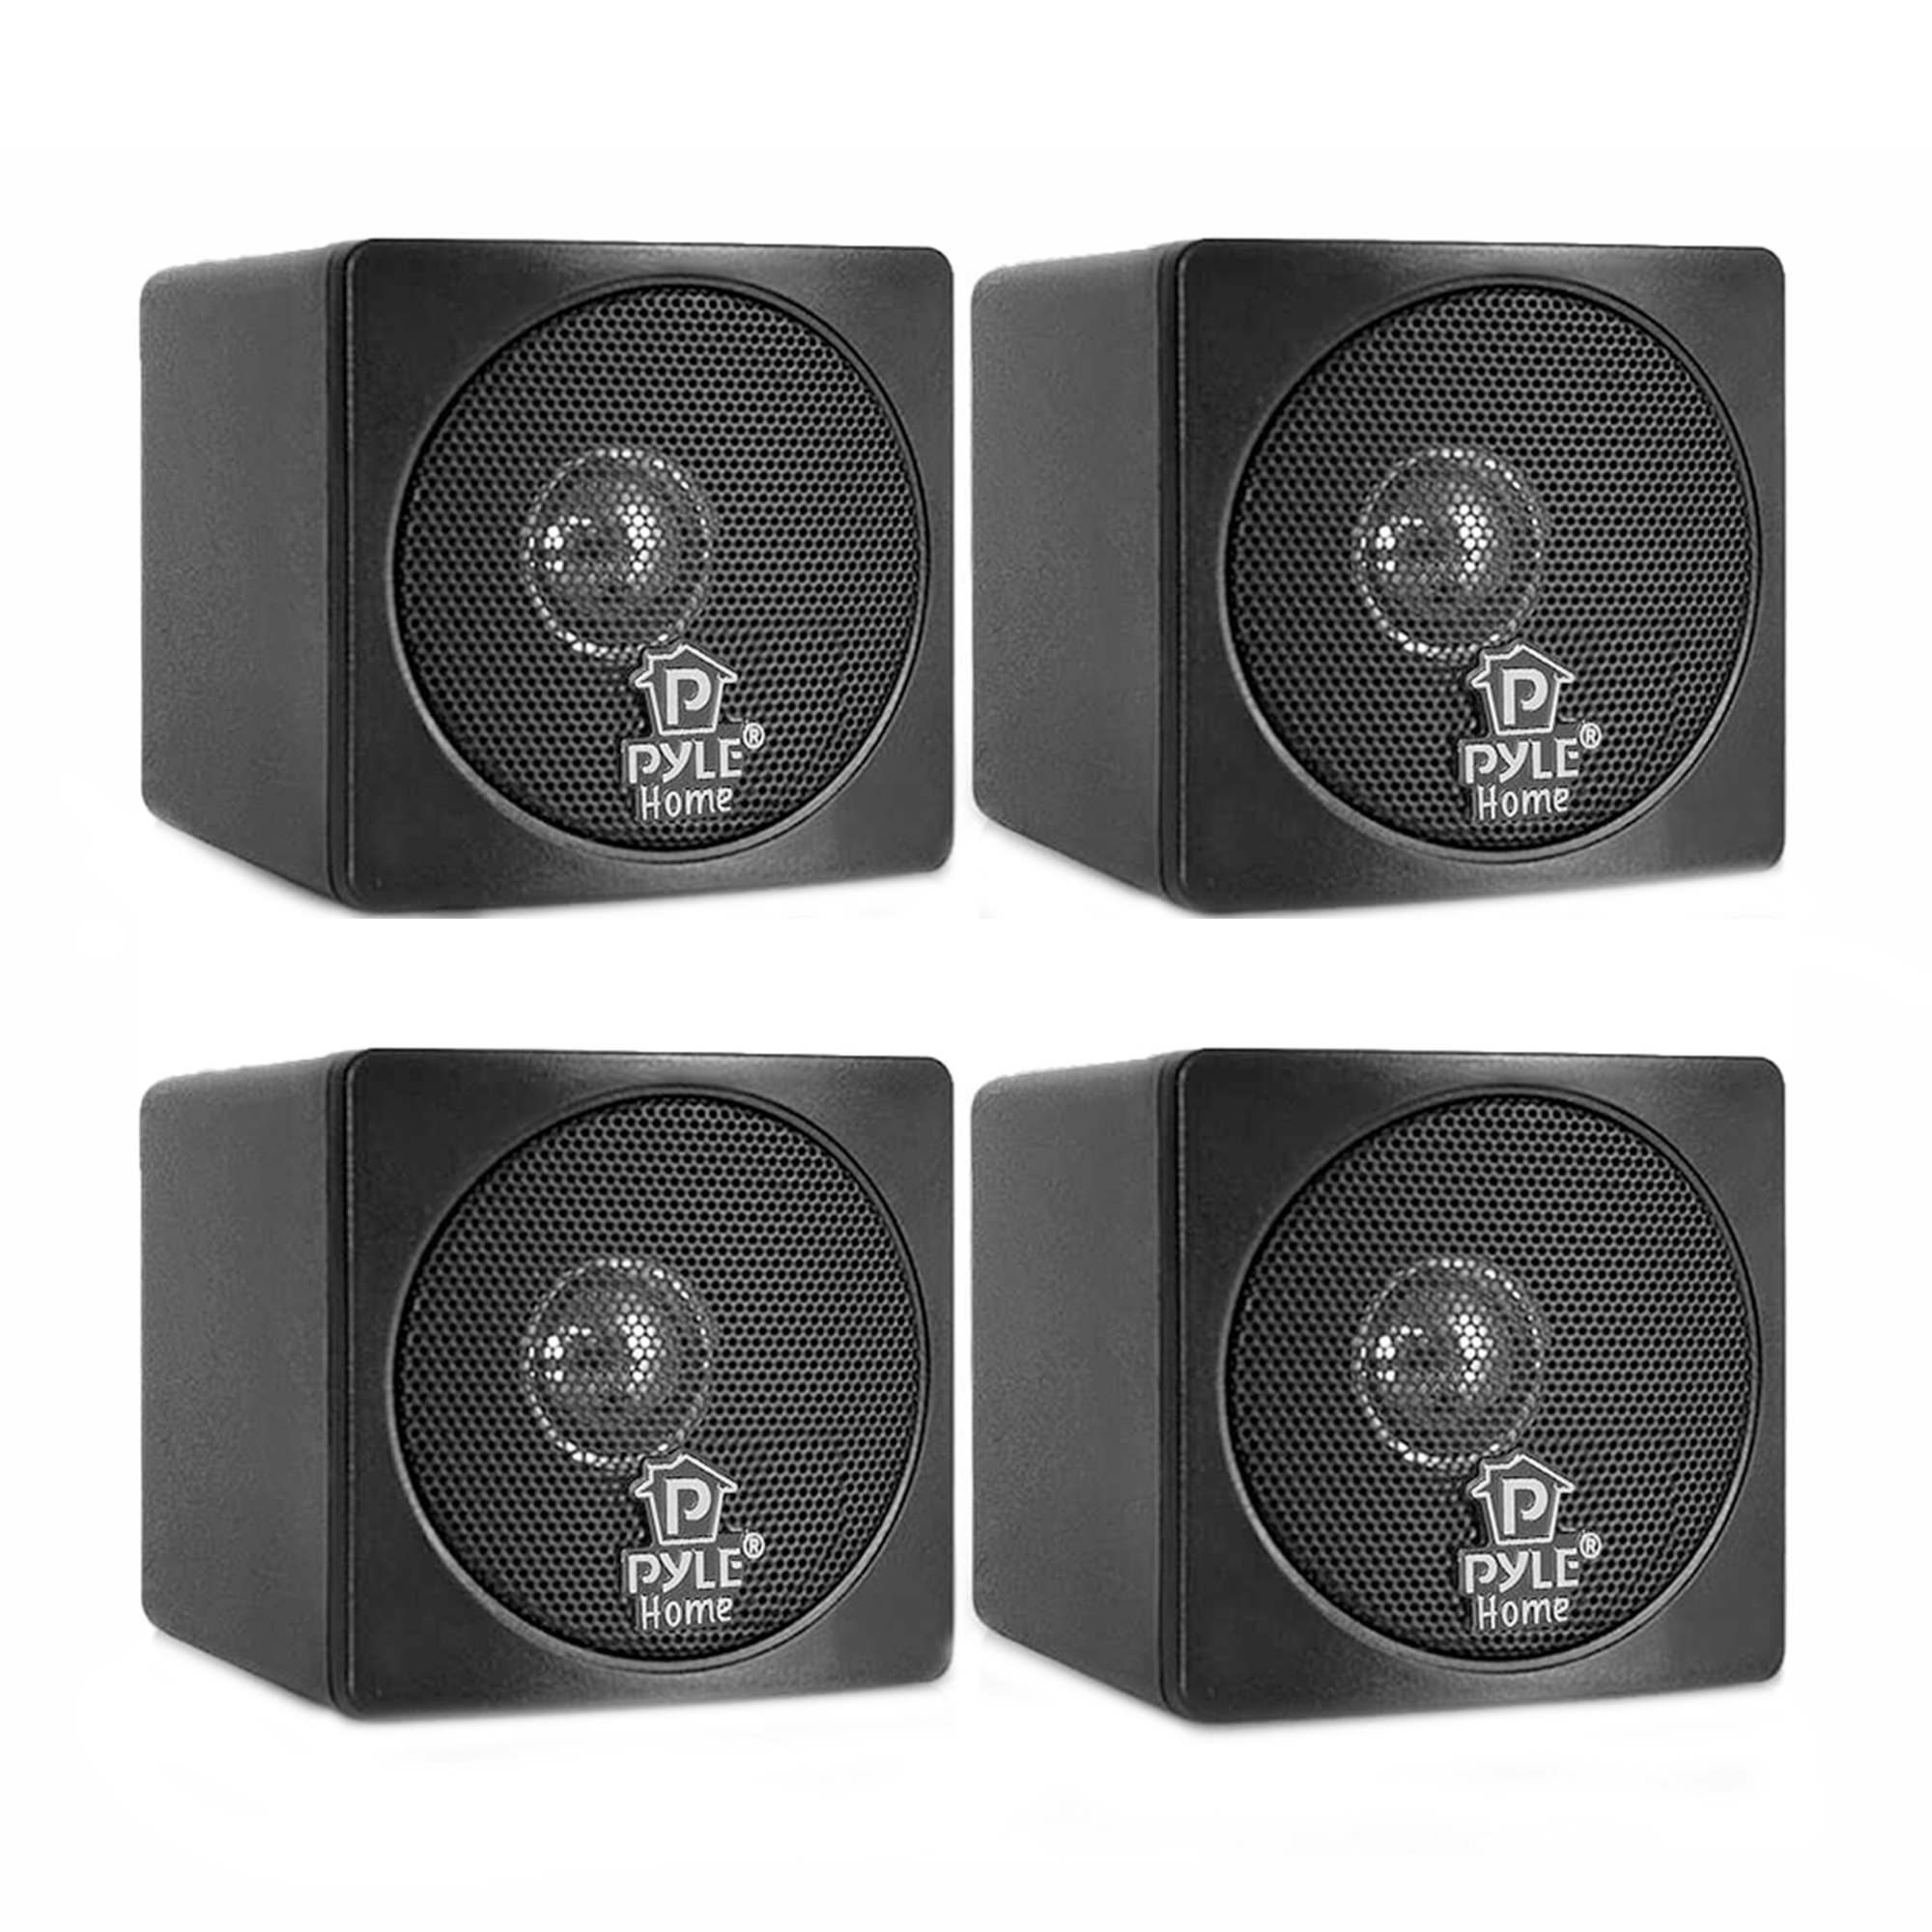 Pyle PCB3BK 3 Inch 100W Mini Cube Bookshelf Stereo Speakers, Black (4 Speakers) - image 1 of 5